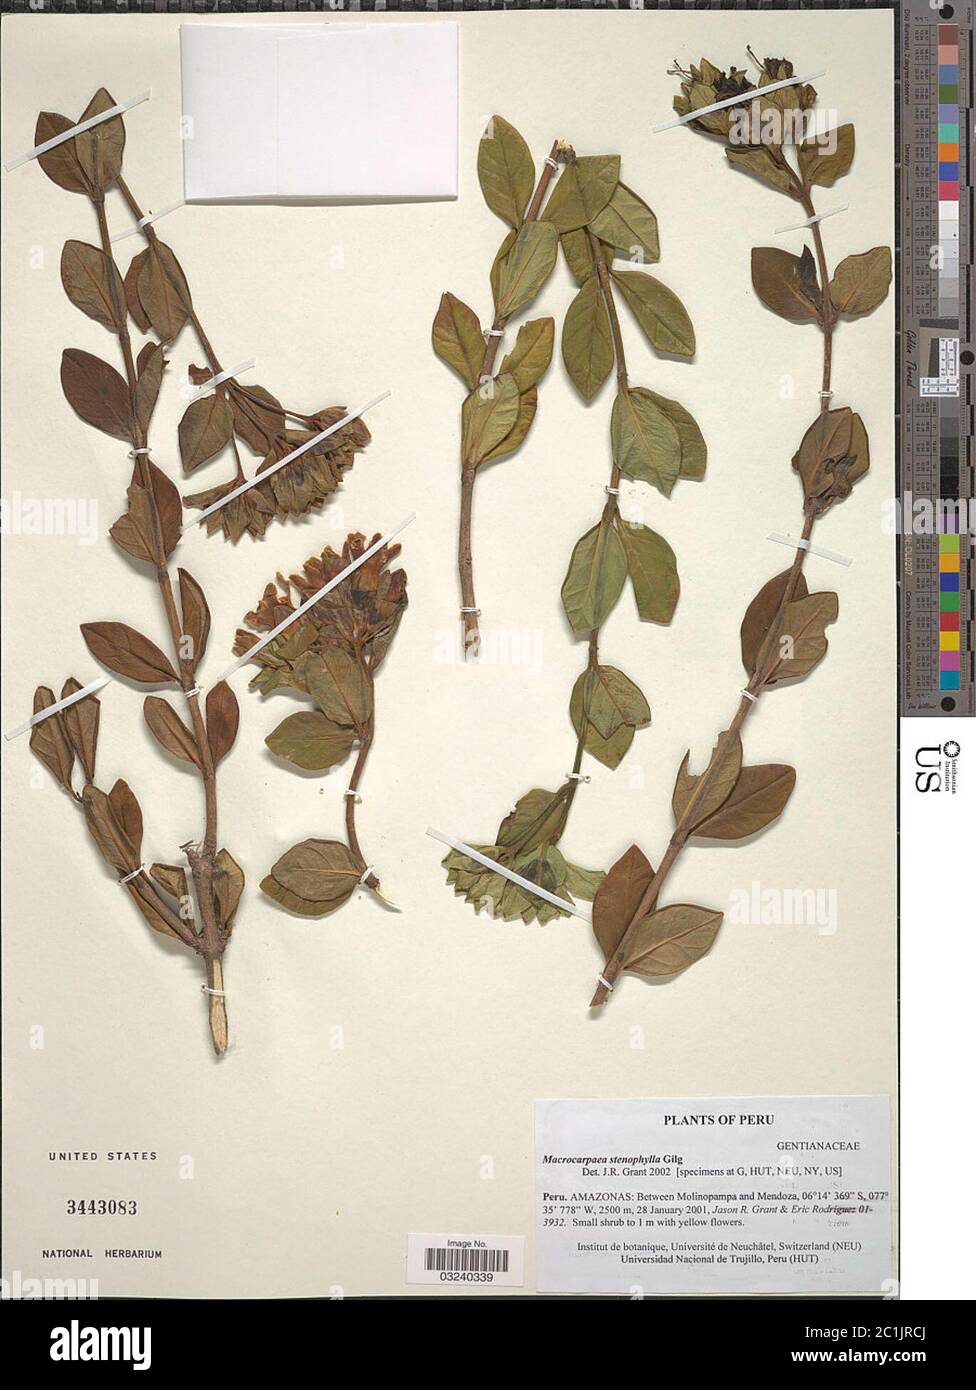 Macrocarpaea stenophylla Gilg Macrocarpaea stenophylla Gilg. Stock Photo